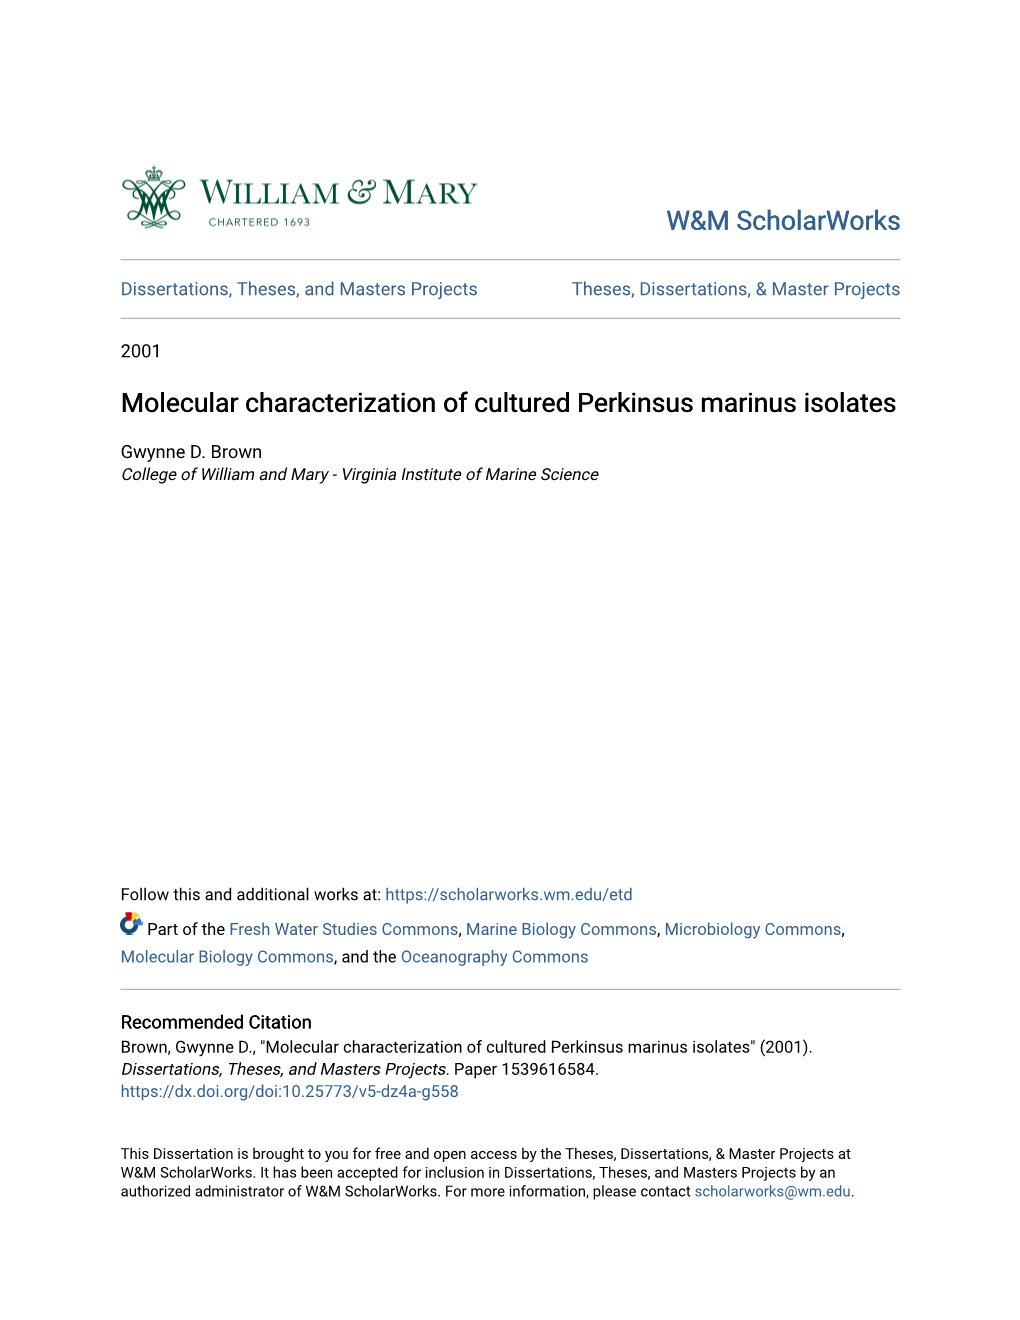 Molecular Characterization of Cultured Perkinsus Marinus Isolates